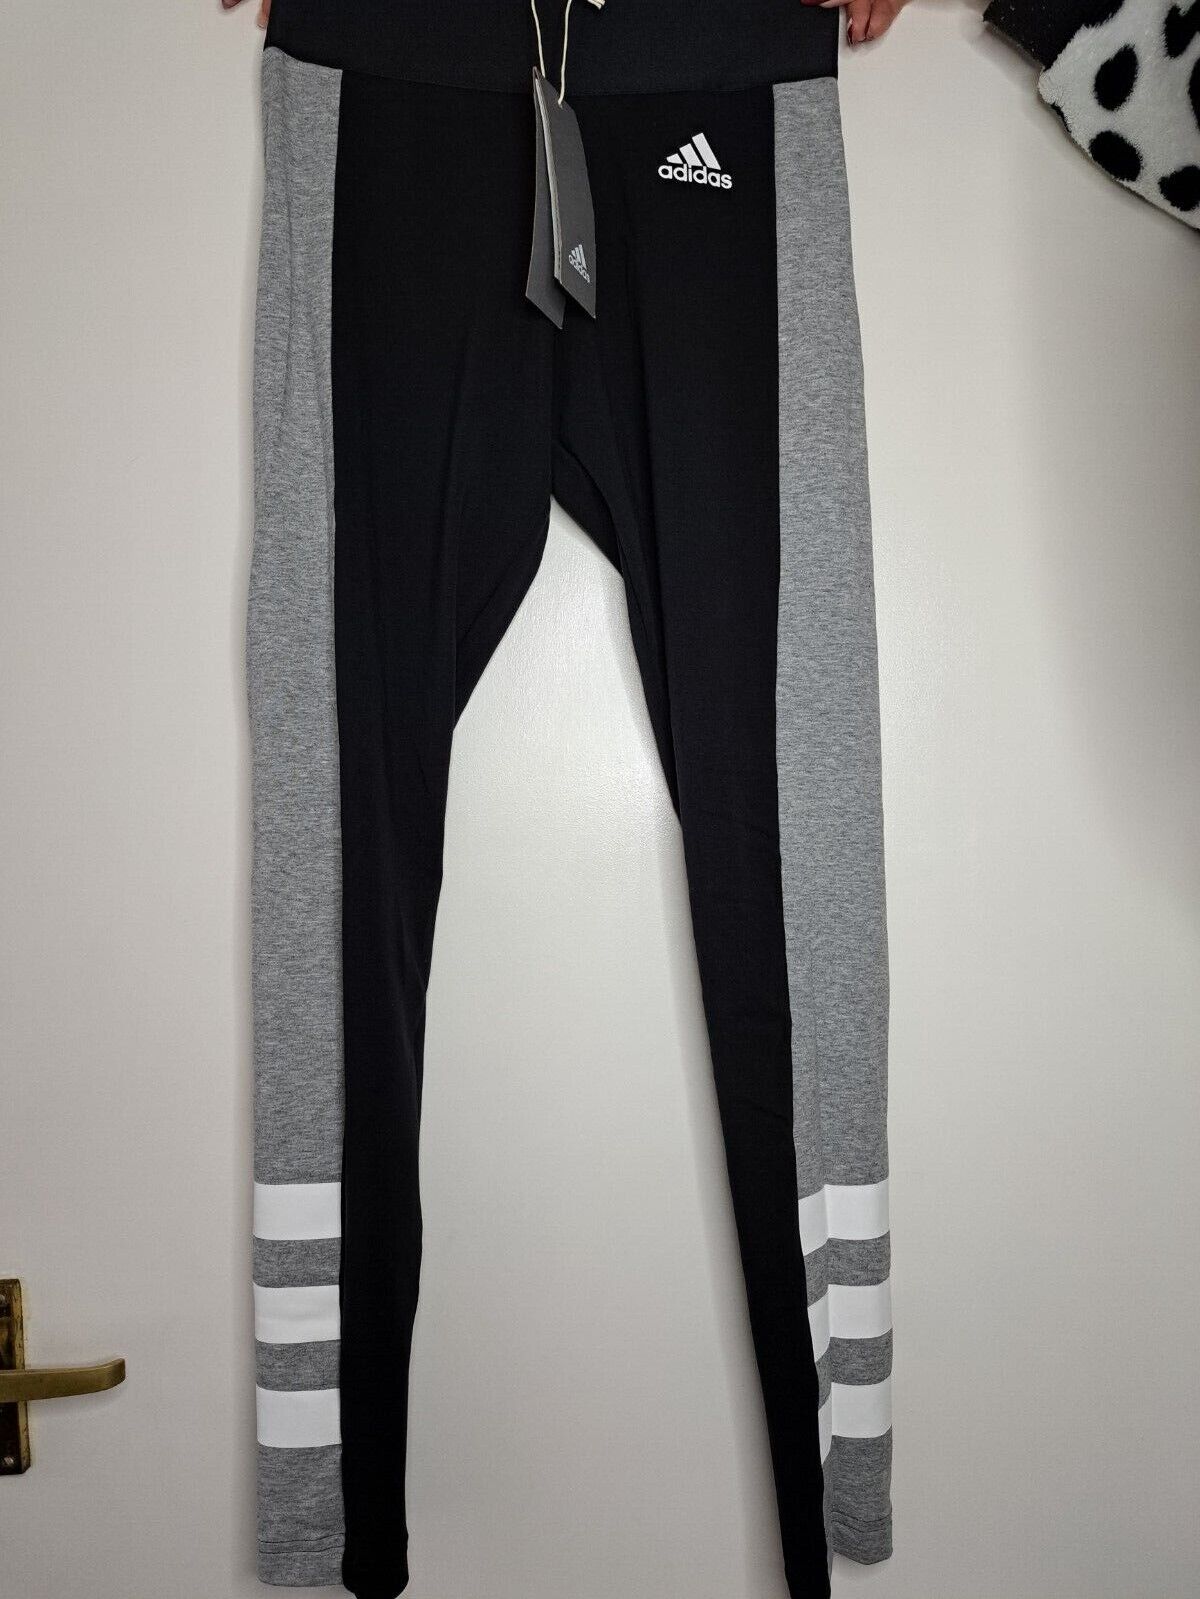 Adidas Pants Womens Sid Tght Grey/Black XS | eBay